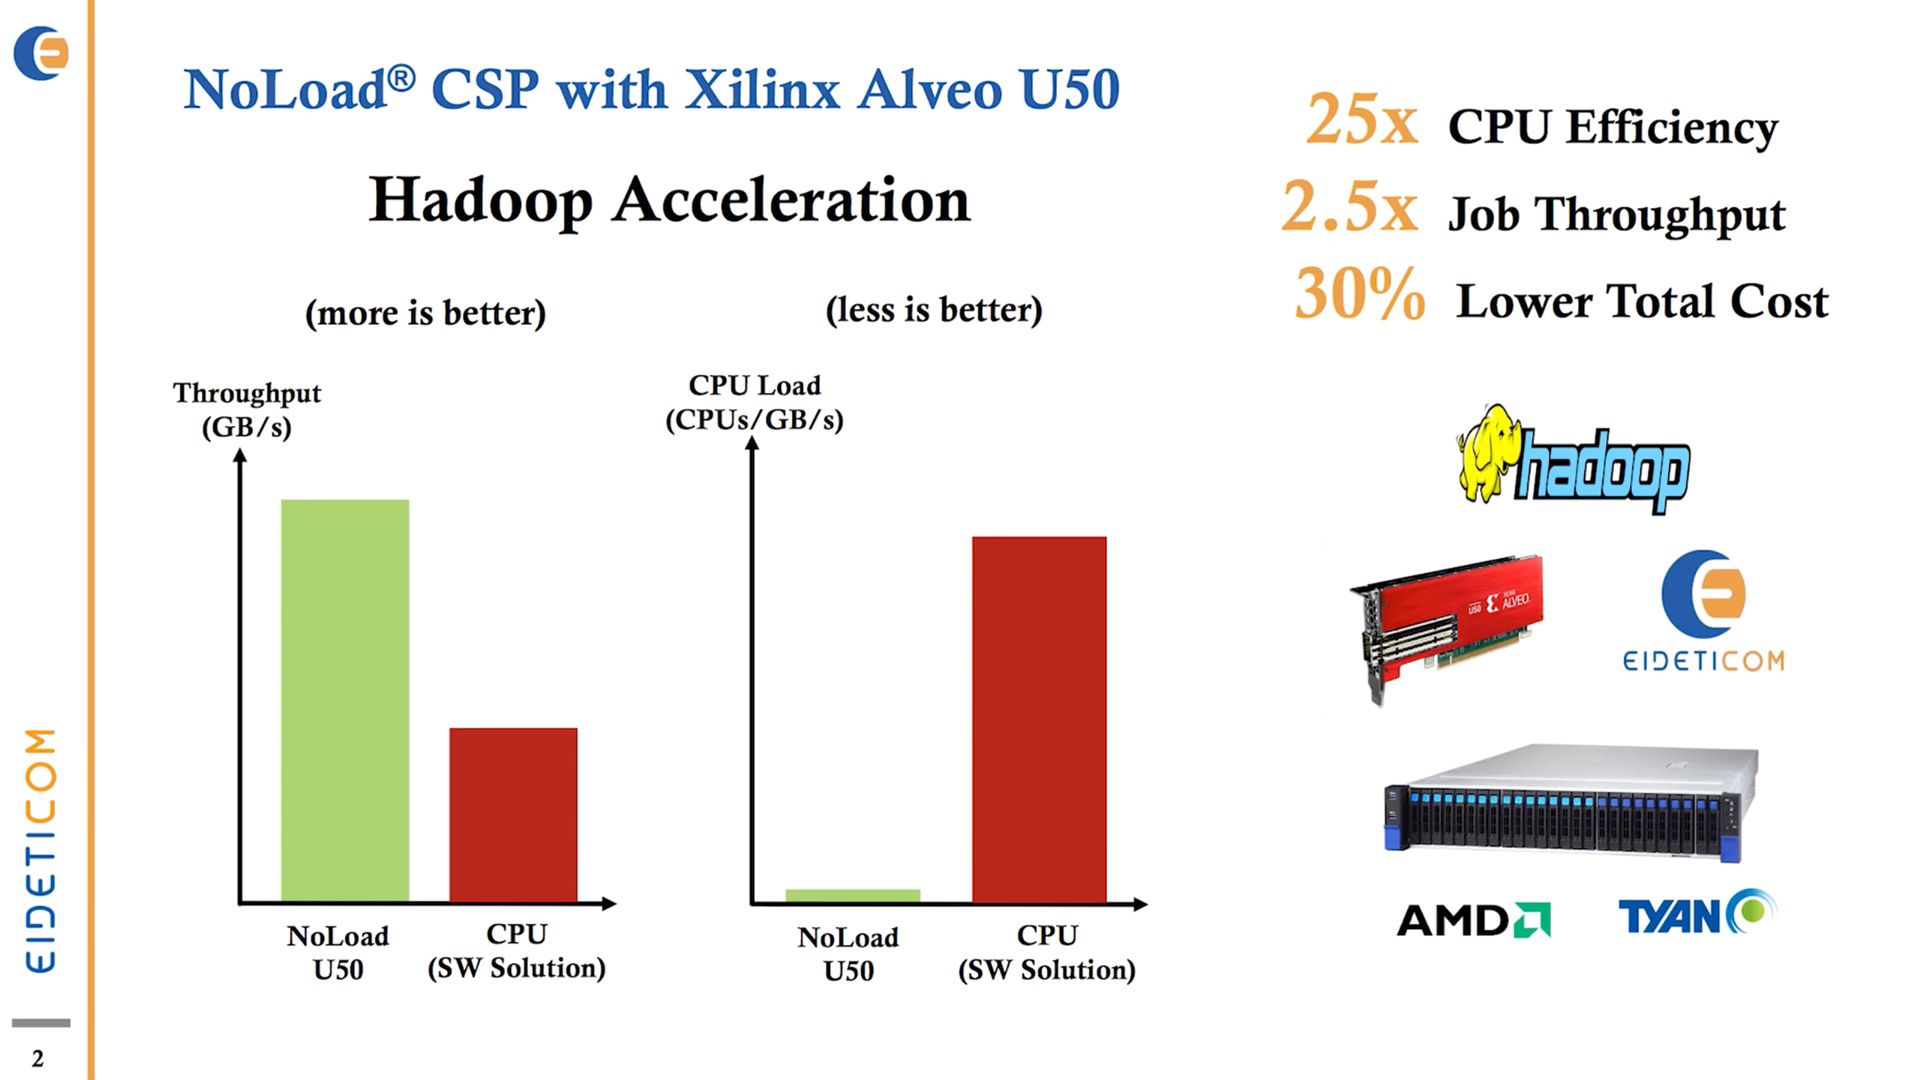 Flash Memory Summit 2019: Hadoop Acceleration using Alveo™ U50 with Eideticom’s NoLoad® CSP